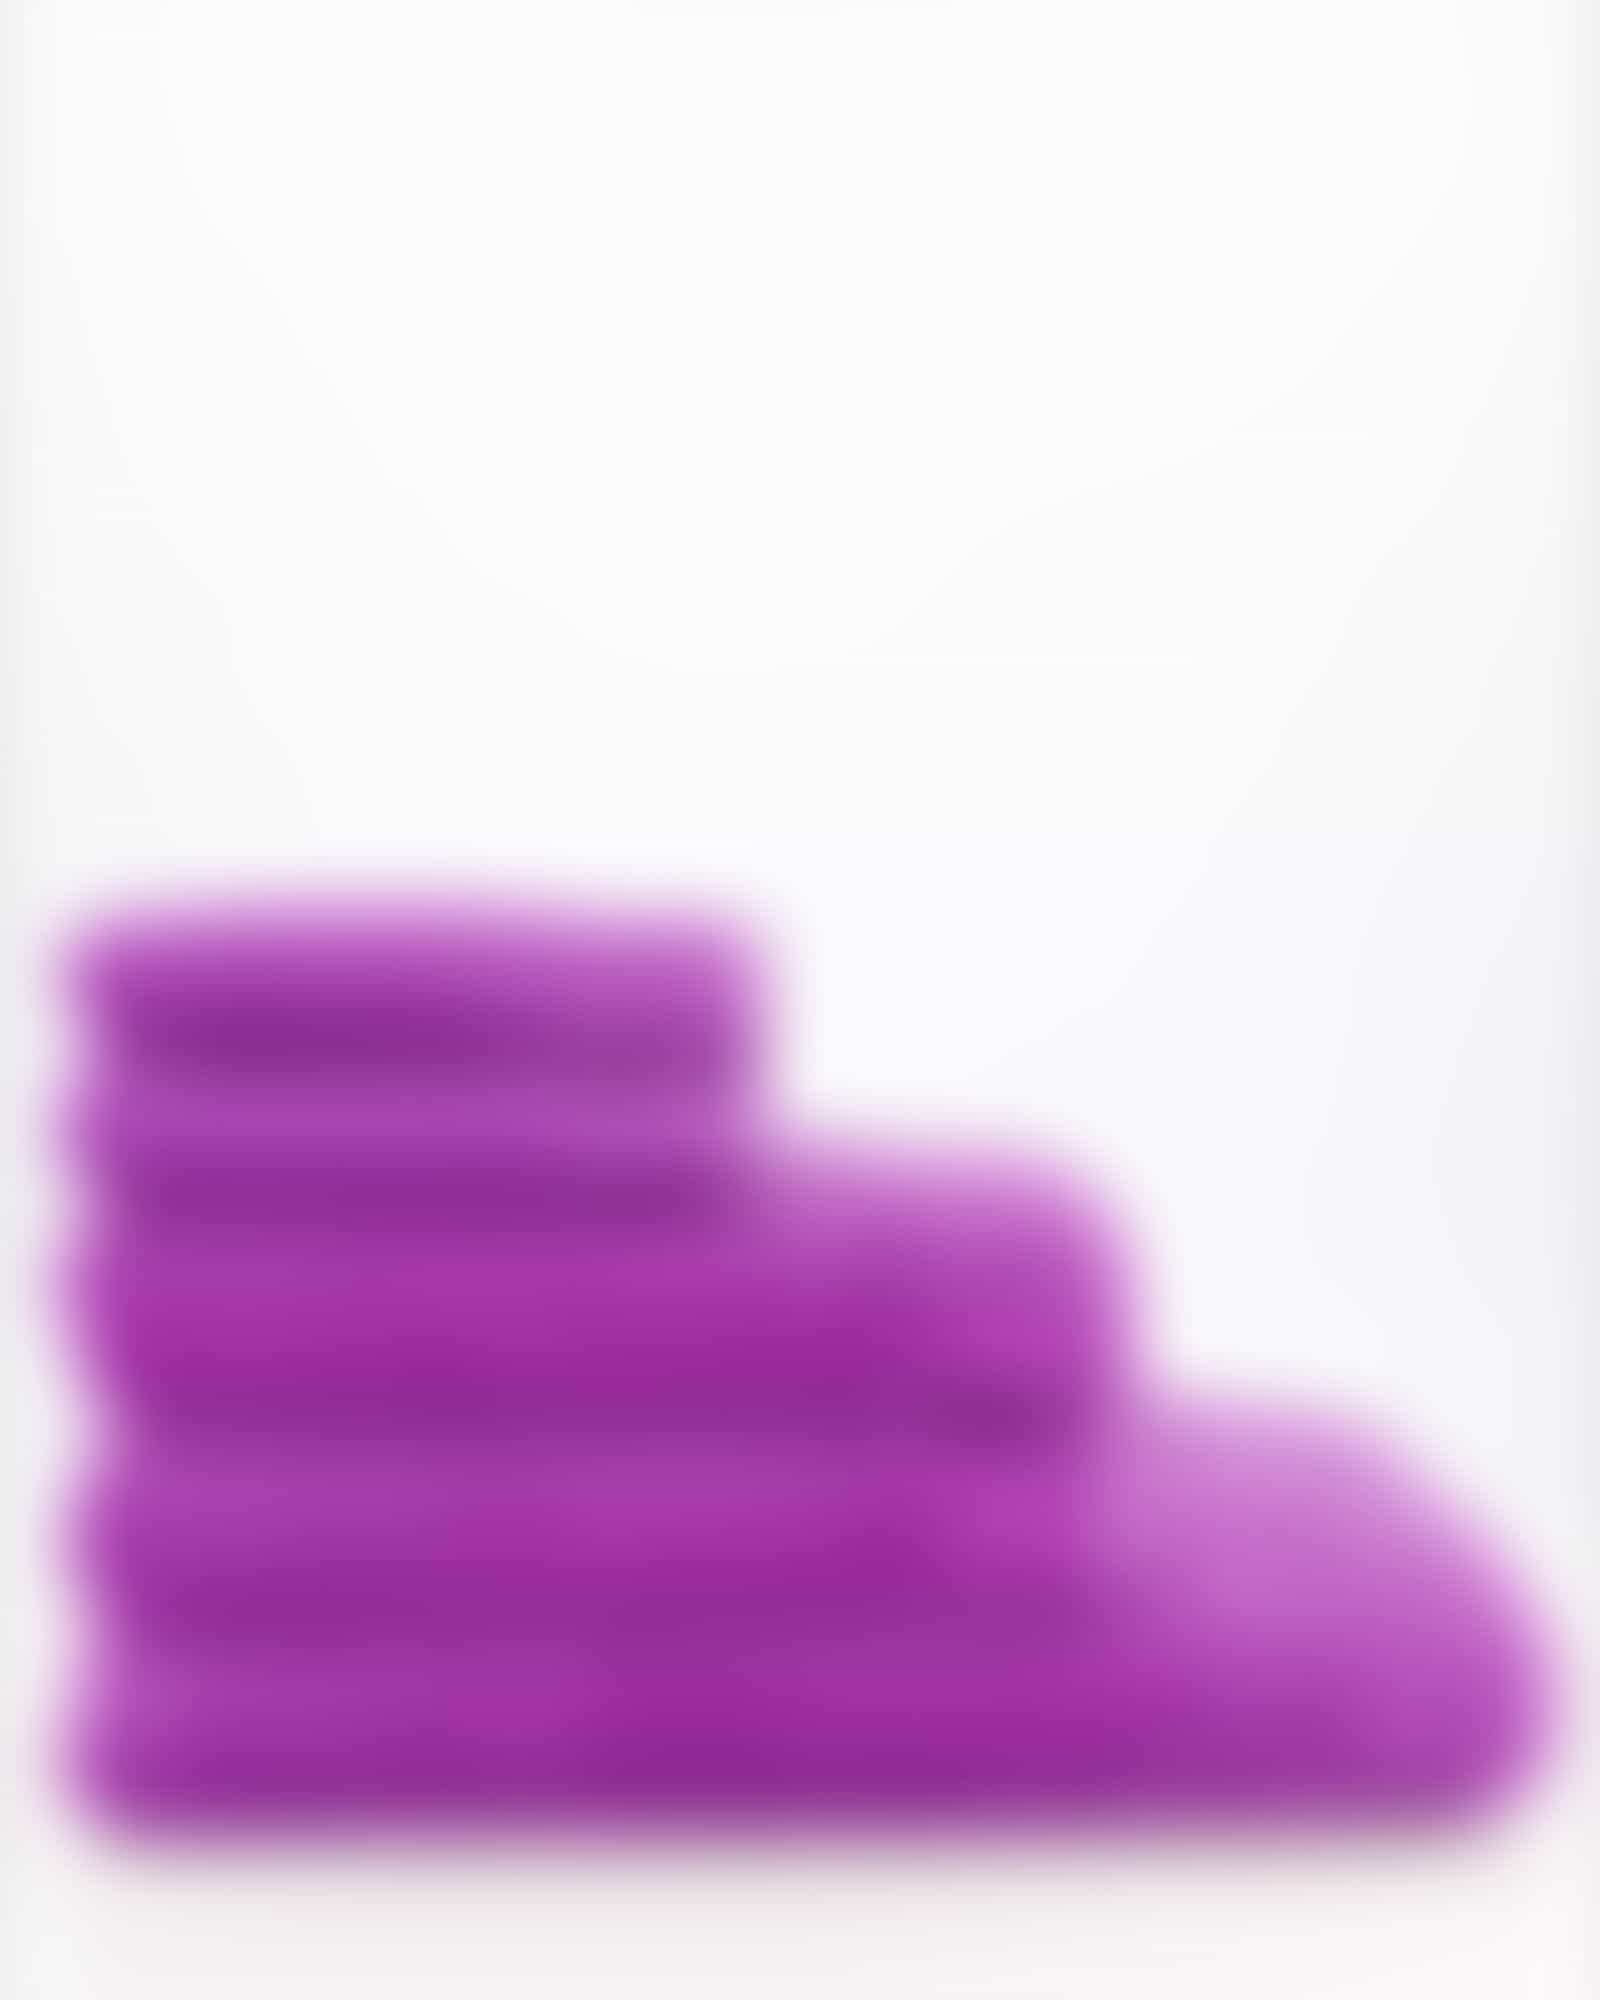 Vossen Handtücher Calypso Feeling - Farbe: lollipop - 8460 - Handtuch 50x100 cm